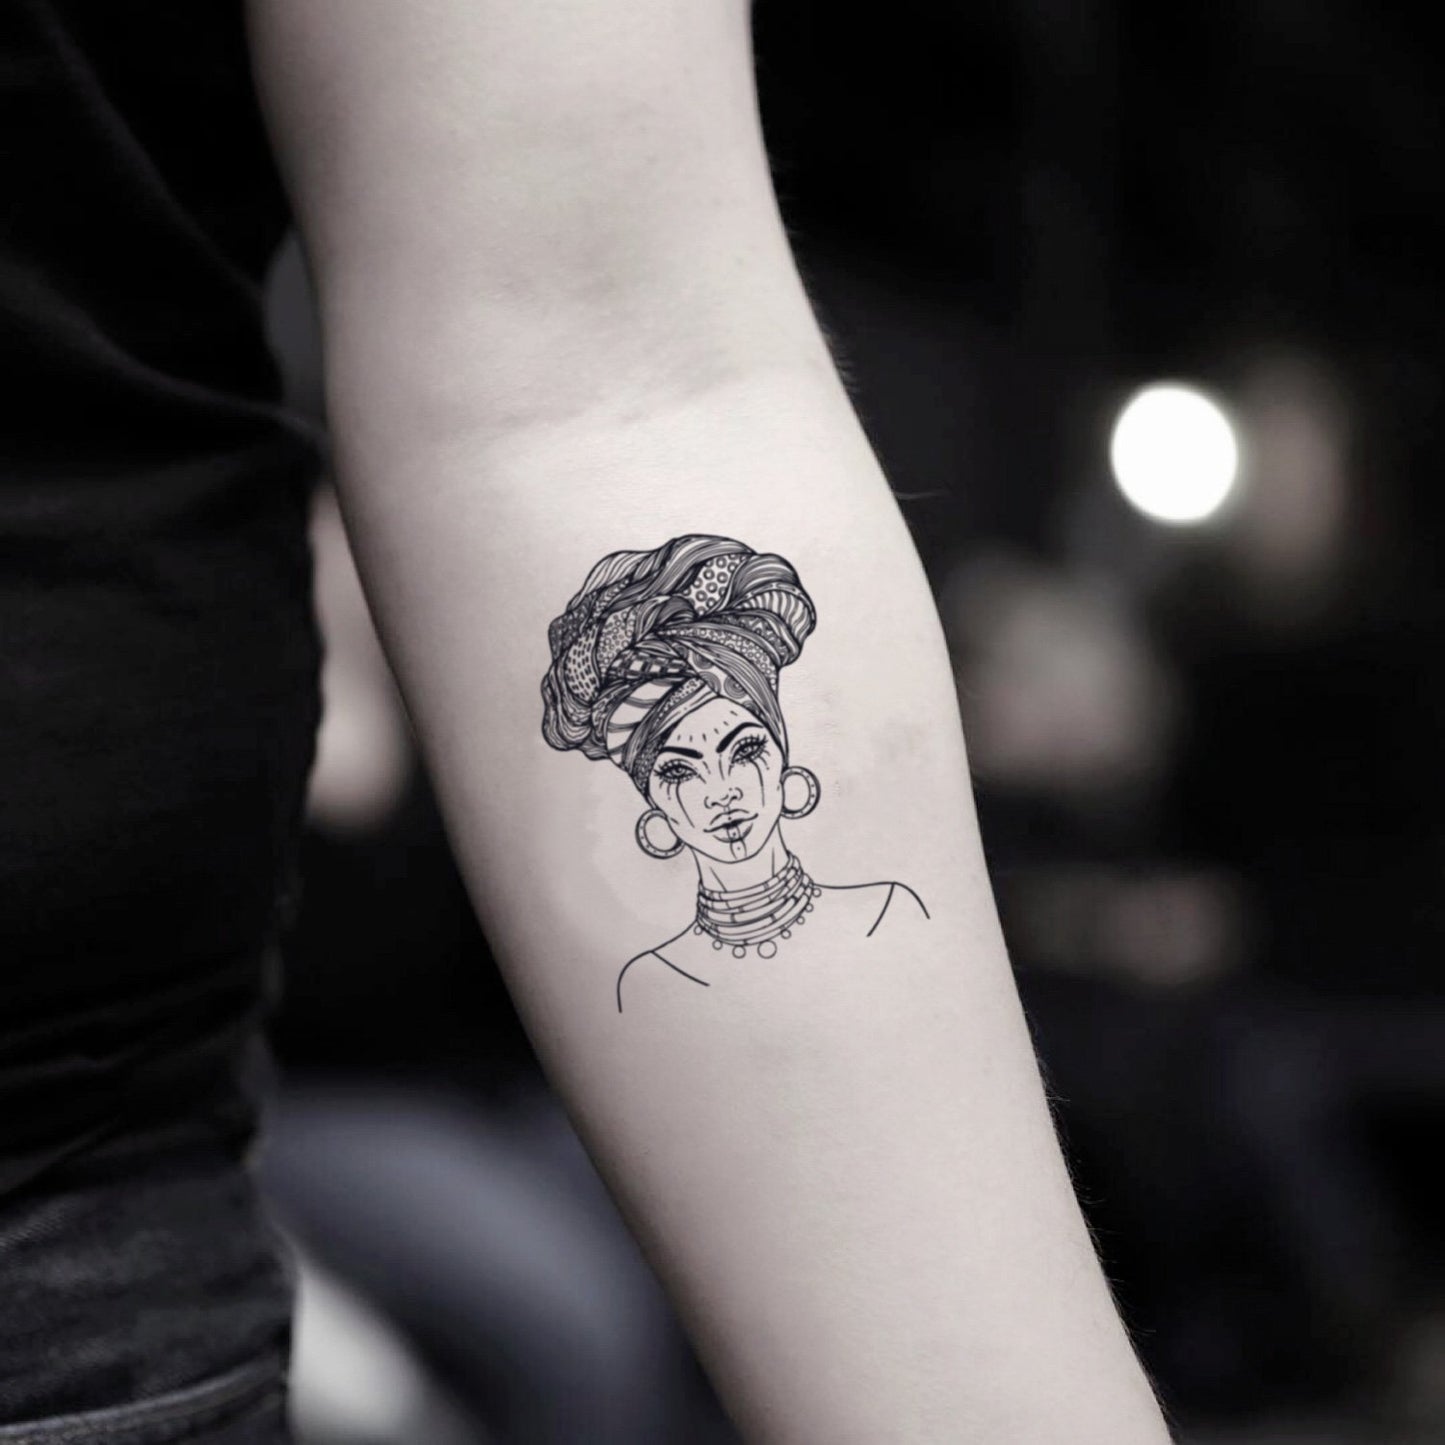 fake small black african woman illustrative temporary tattoo sticker design idea on inner arm